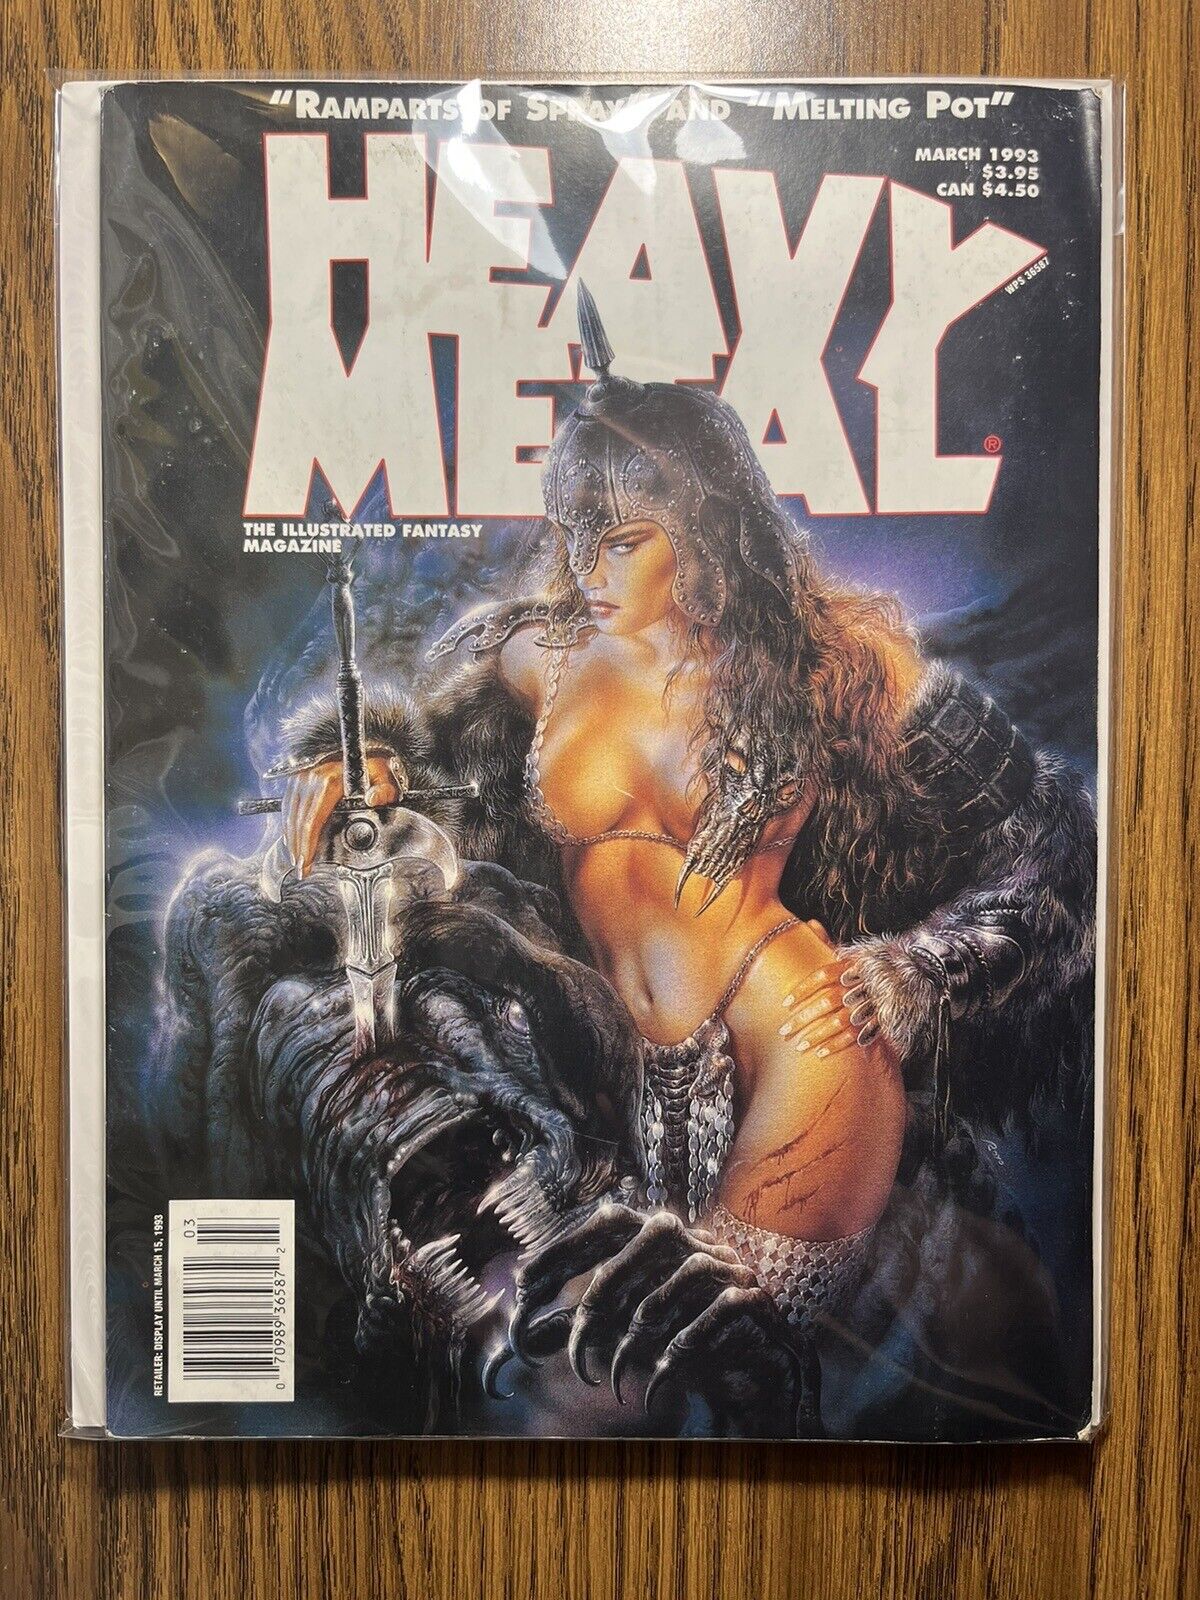 HEAVY METAL MAGAZINE 1 GORGEOUS LUIS ROYO COVER METAL MAMMOTH MAR 1993 VINTAGE